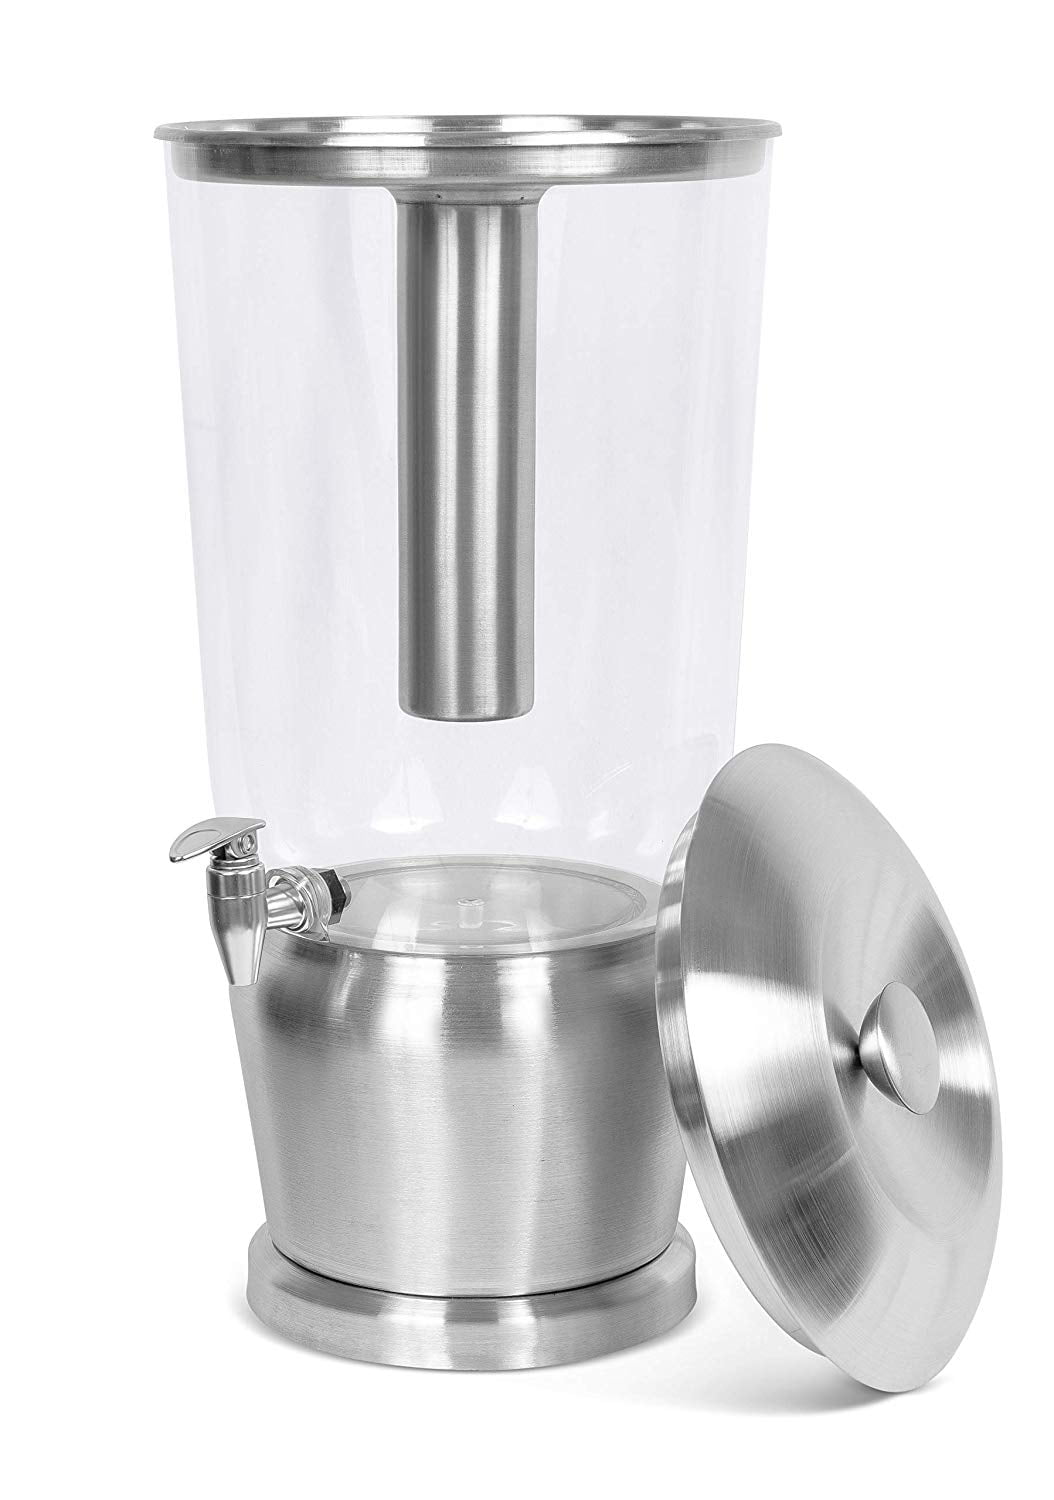 Prep & Savour 1.5 Gallon Hammered Glass Beverage Dispenser With Lid -  Stainless Steel Spigot - Decorative Round Jar For Drinks - Lemonade Sangria  Tea